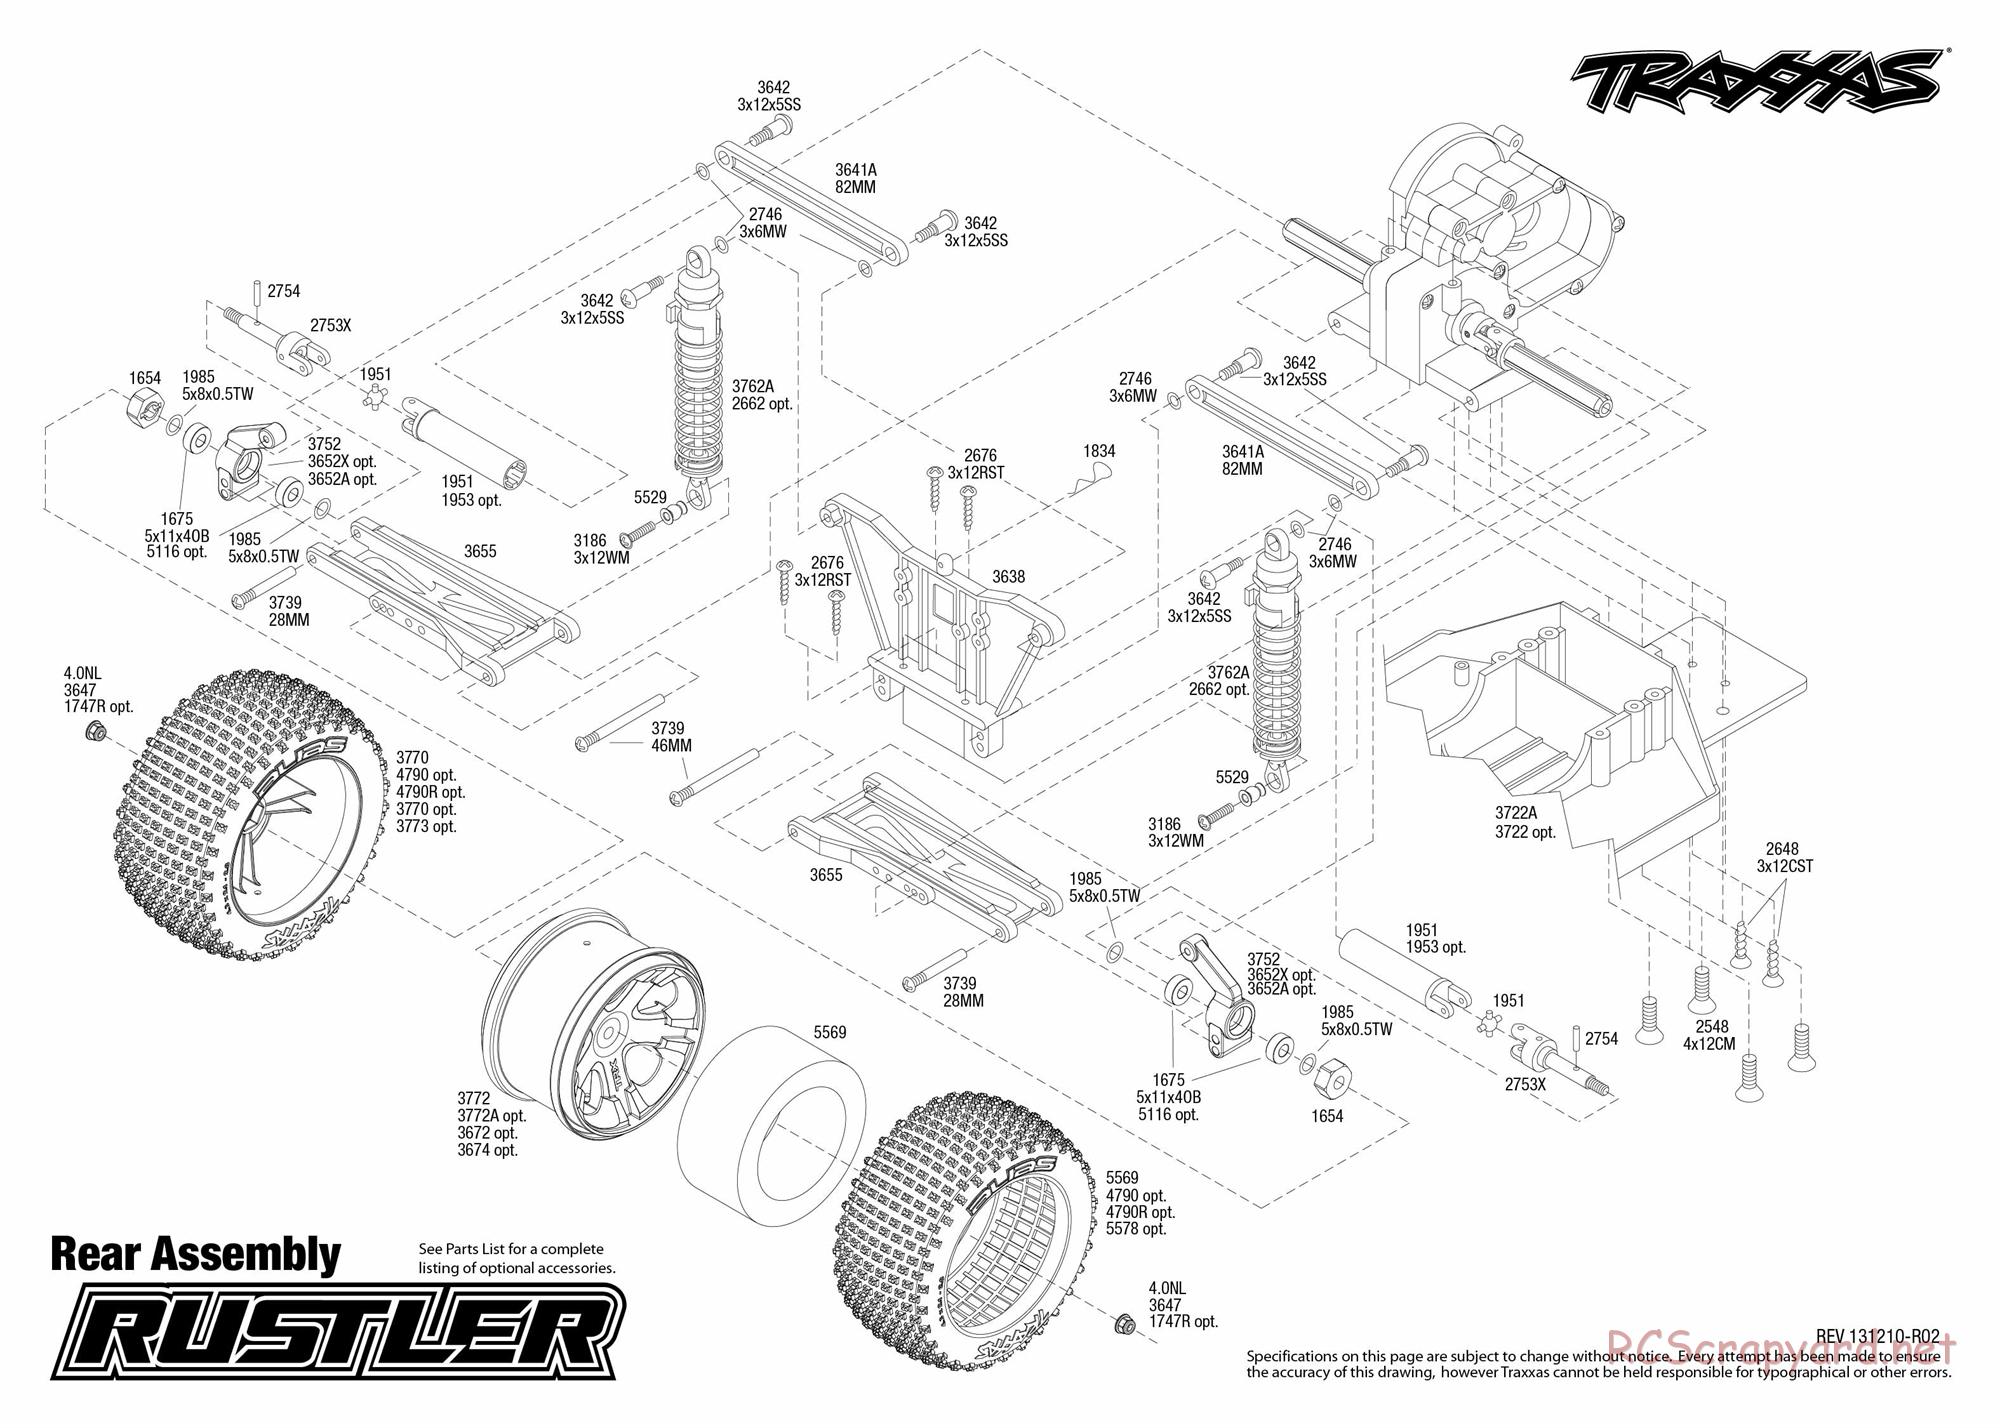 Traxxas - Rustler XL-5 (2013) - Exploded Views - Page 3